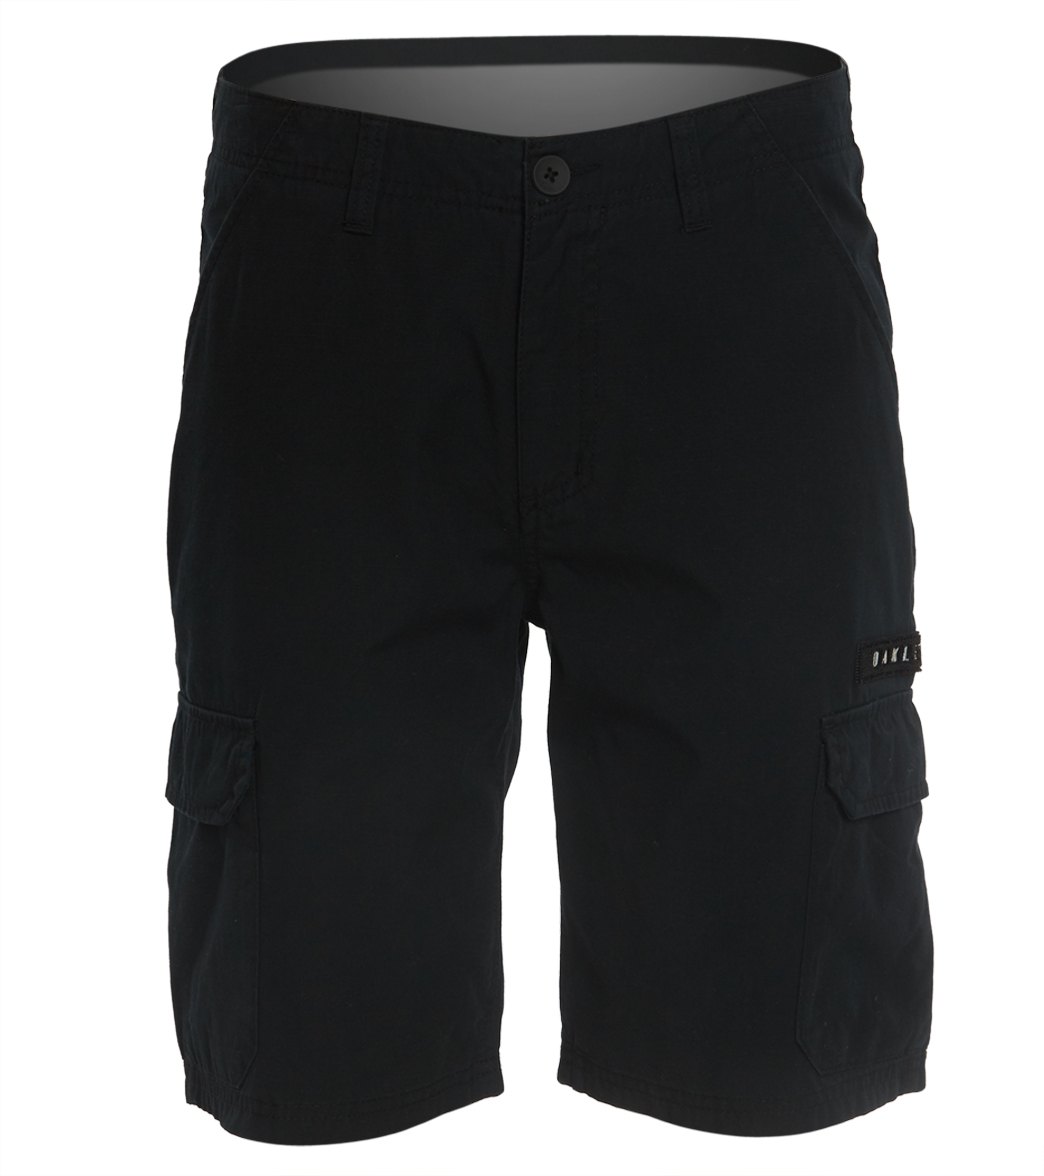 oakley cargo shorts